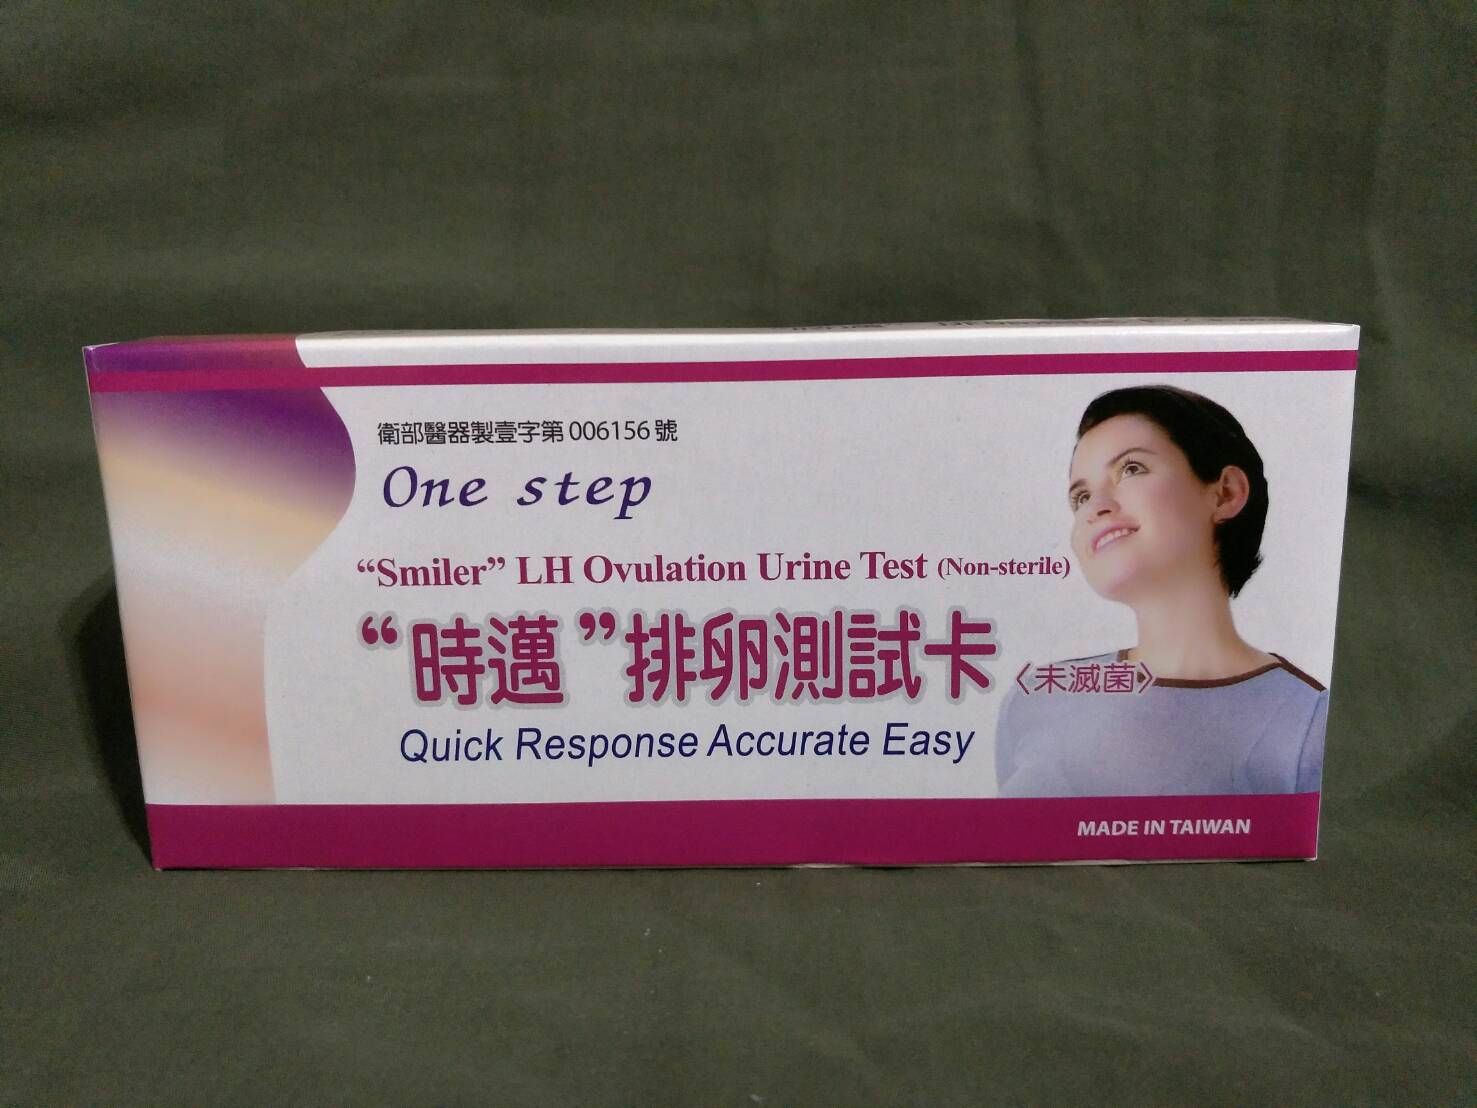 “Smiler” LH Ovulation Urine Test (Non-Sterile)